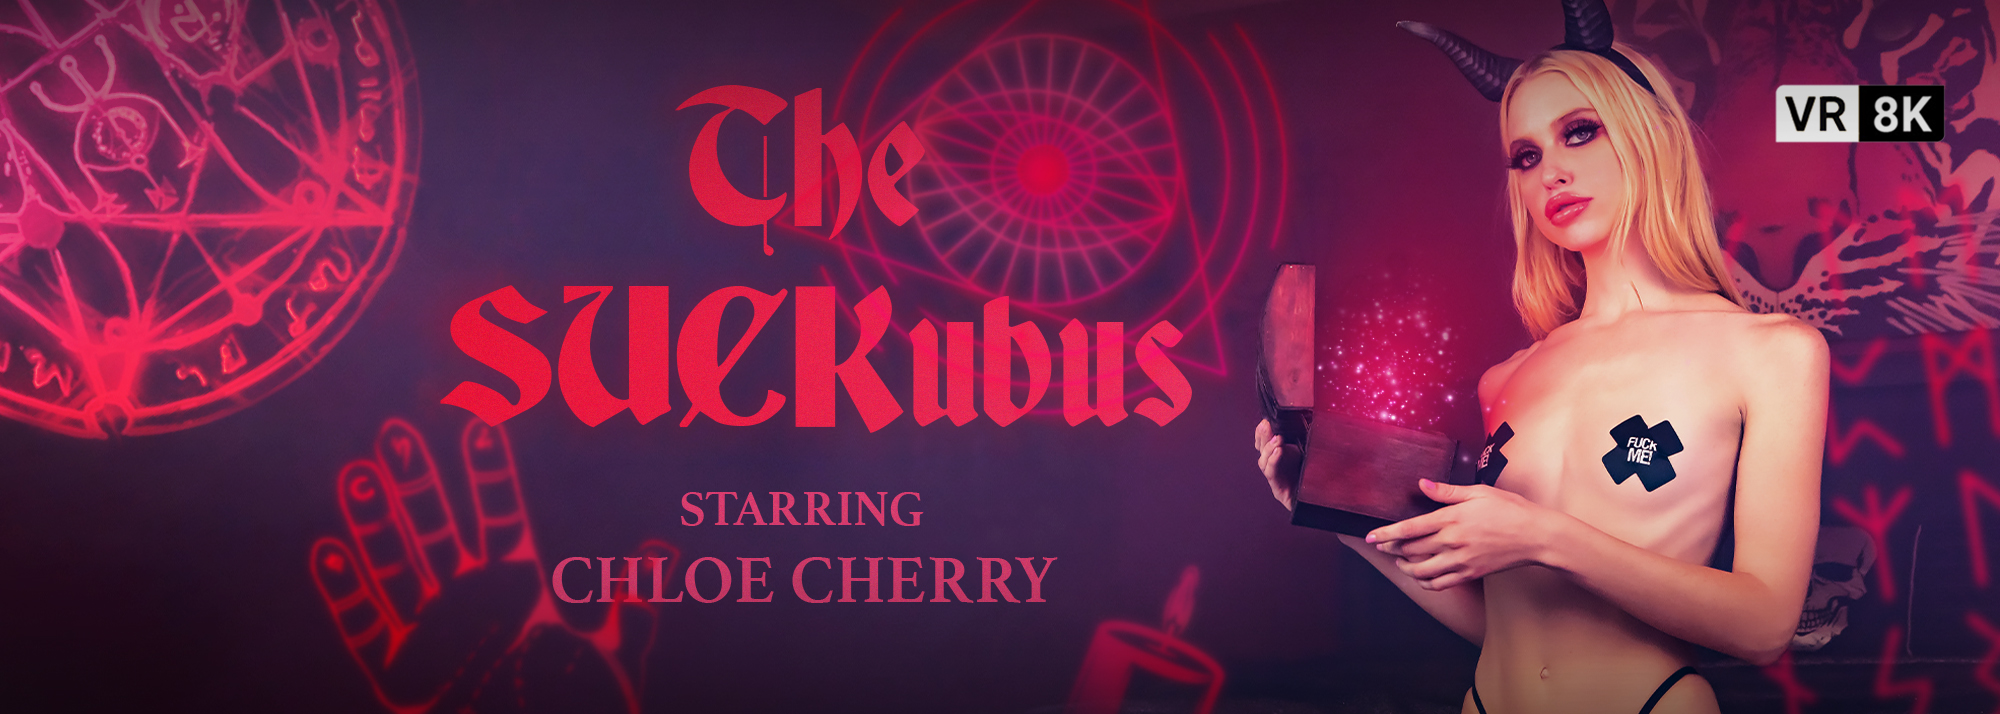 The SUCKubus - VR Porn Video, Starring Chloe Cherry VR